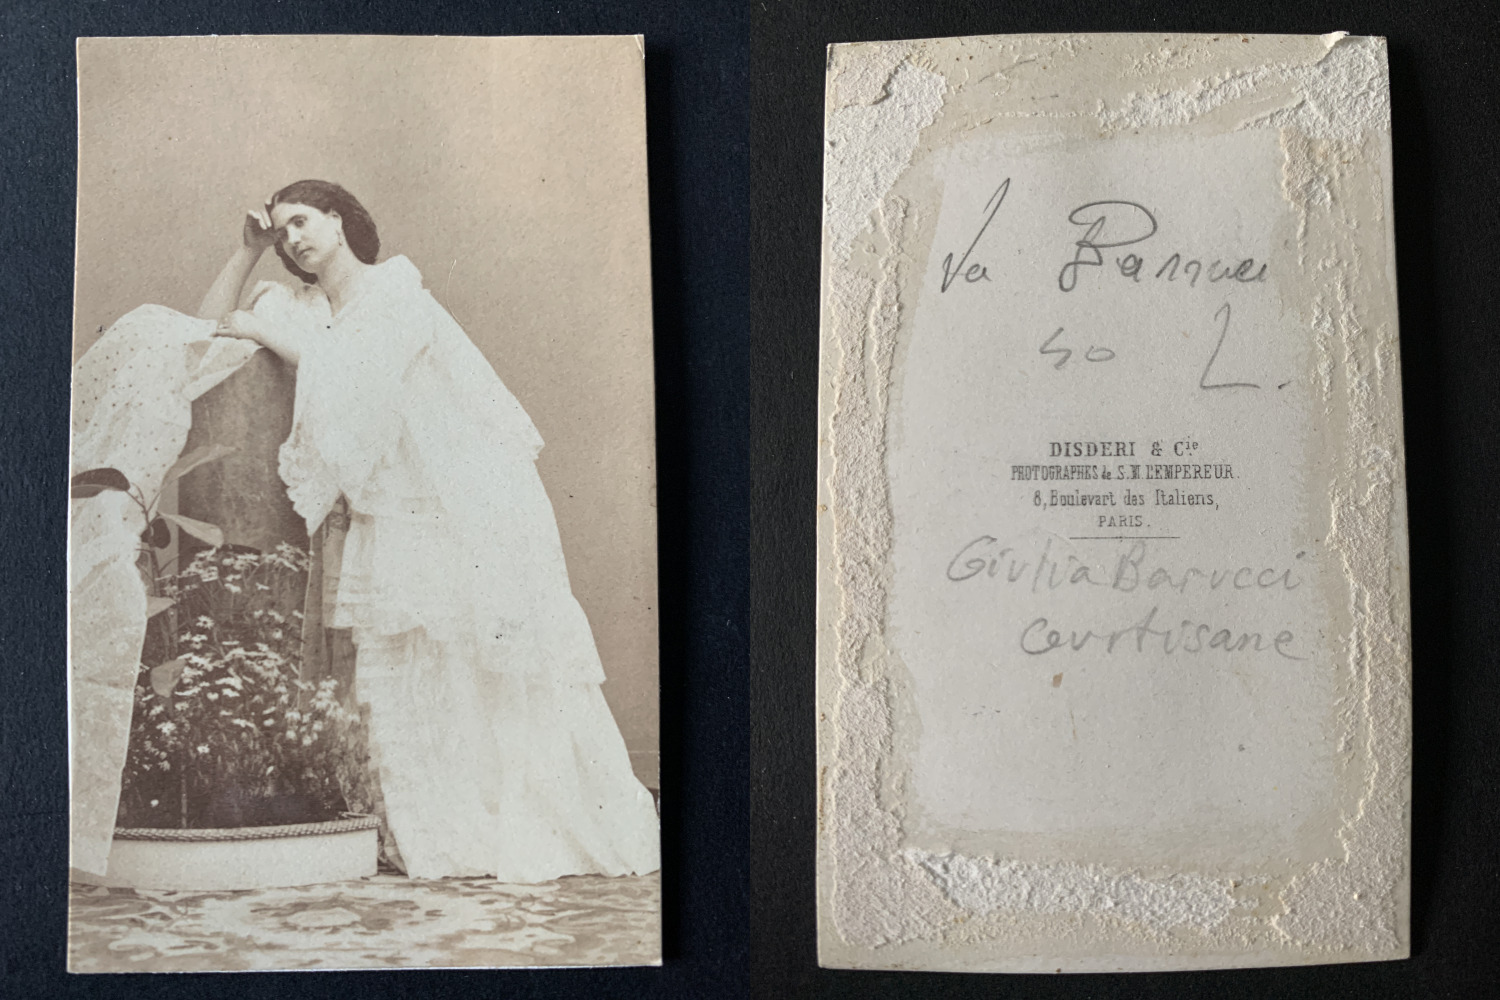 Disderi, Paris, Giulia Barucci, Vintage Courtesan Albumen Print CDV. Giulia  